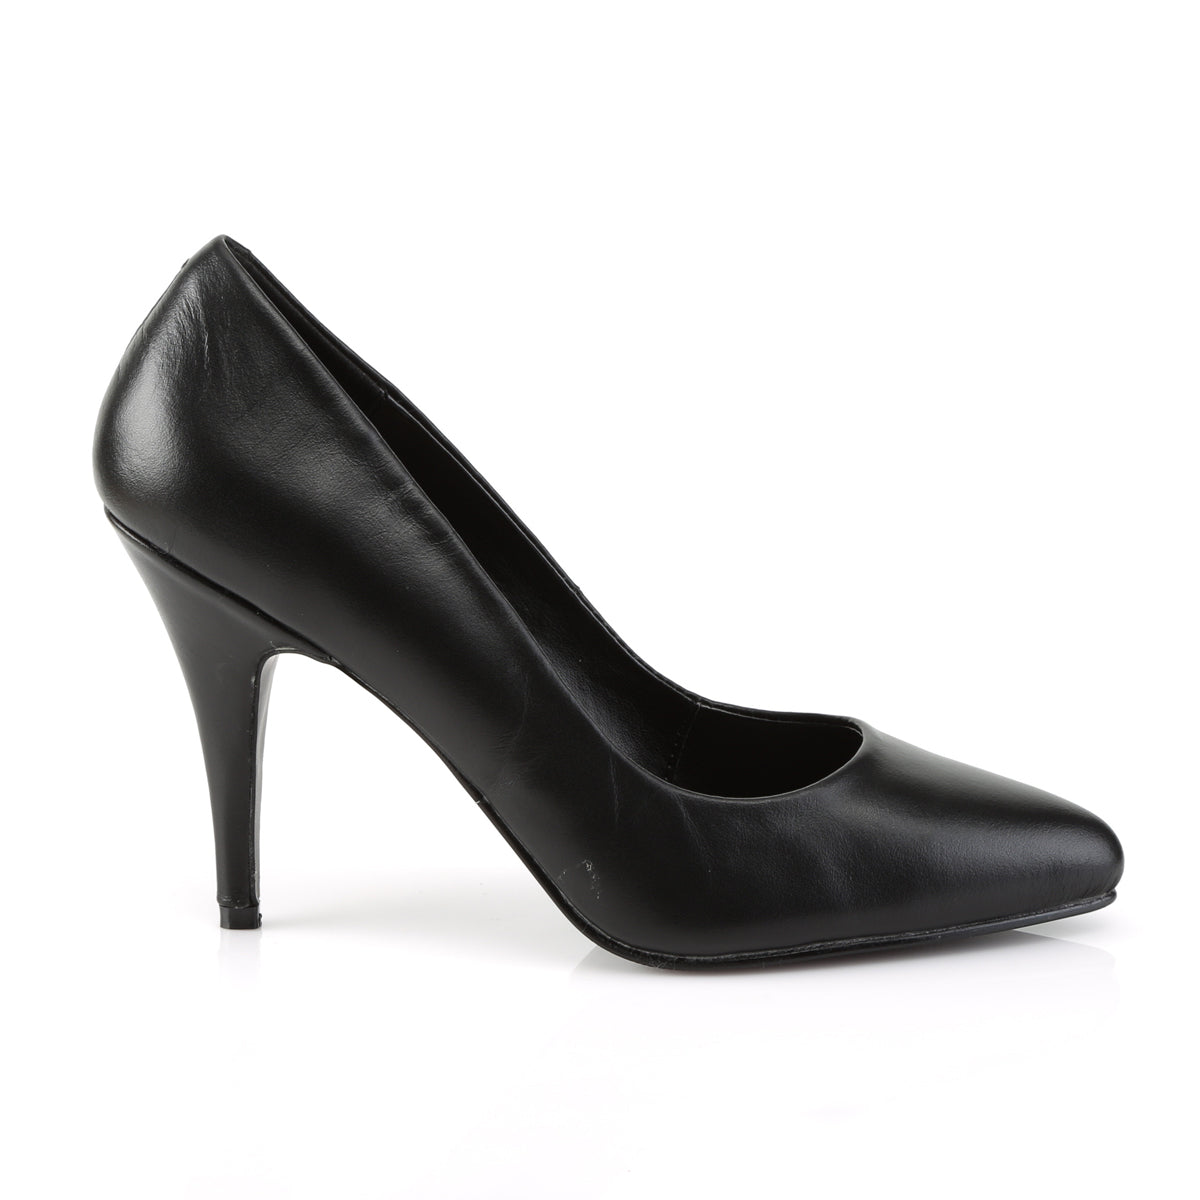 VANITY-420 Pleaser Shoes 4" Heel Black Leather Fetish Shoes-Pleaser- Sexy Shoes Fetish Heels